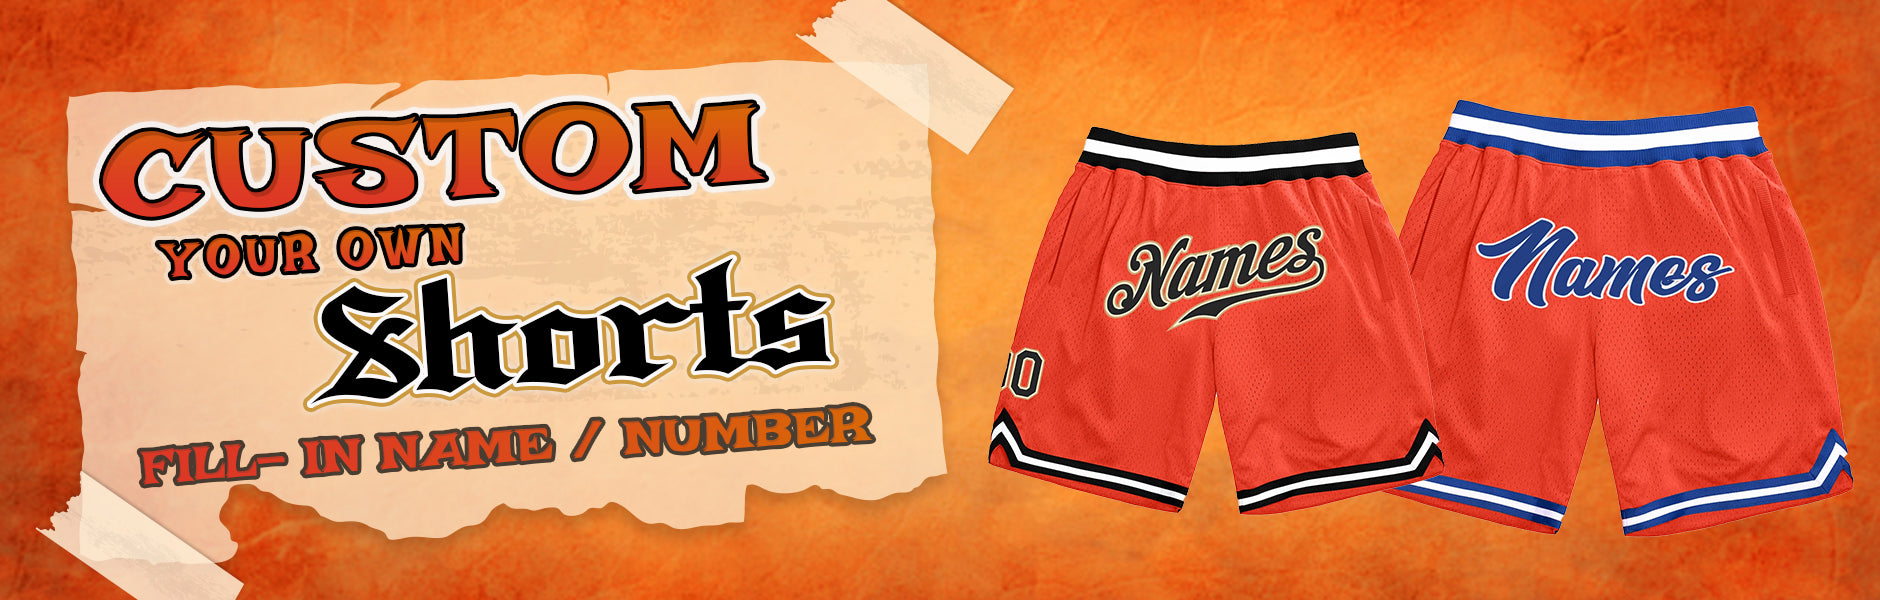 custom shorts orange jersey